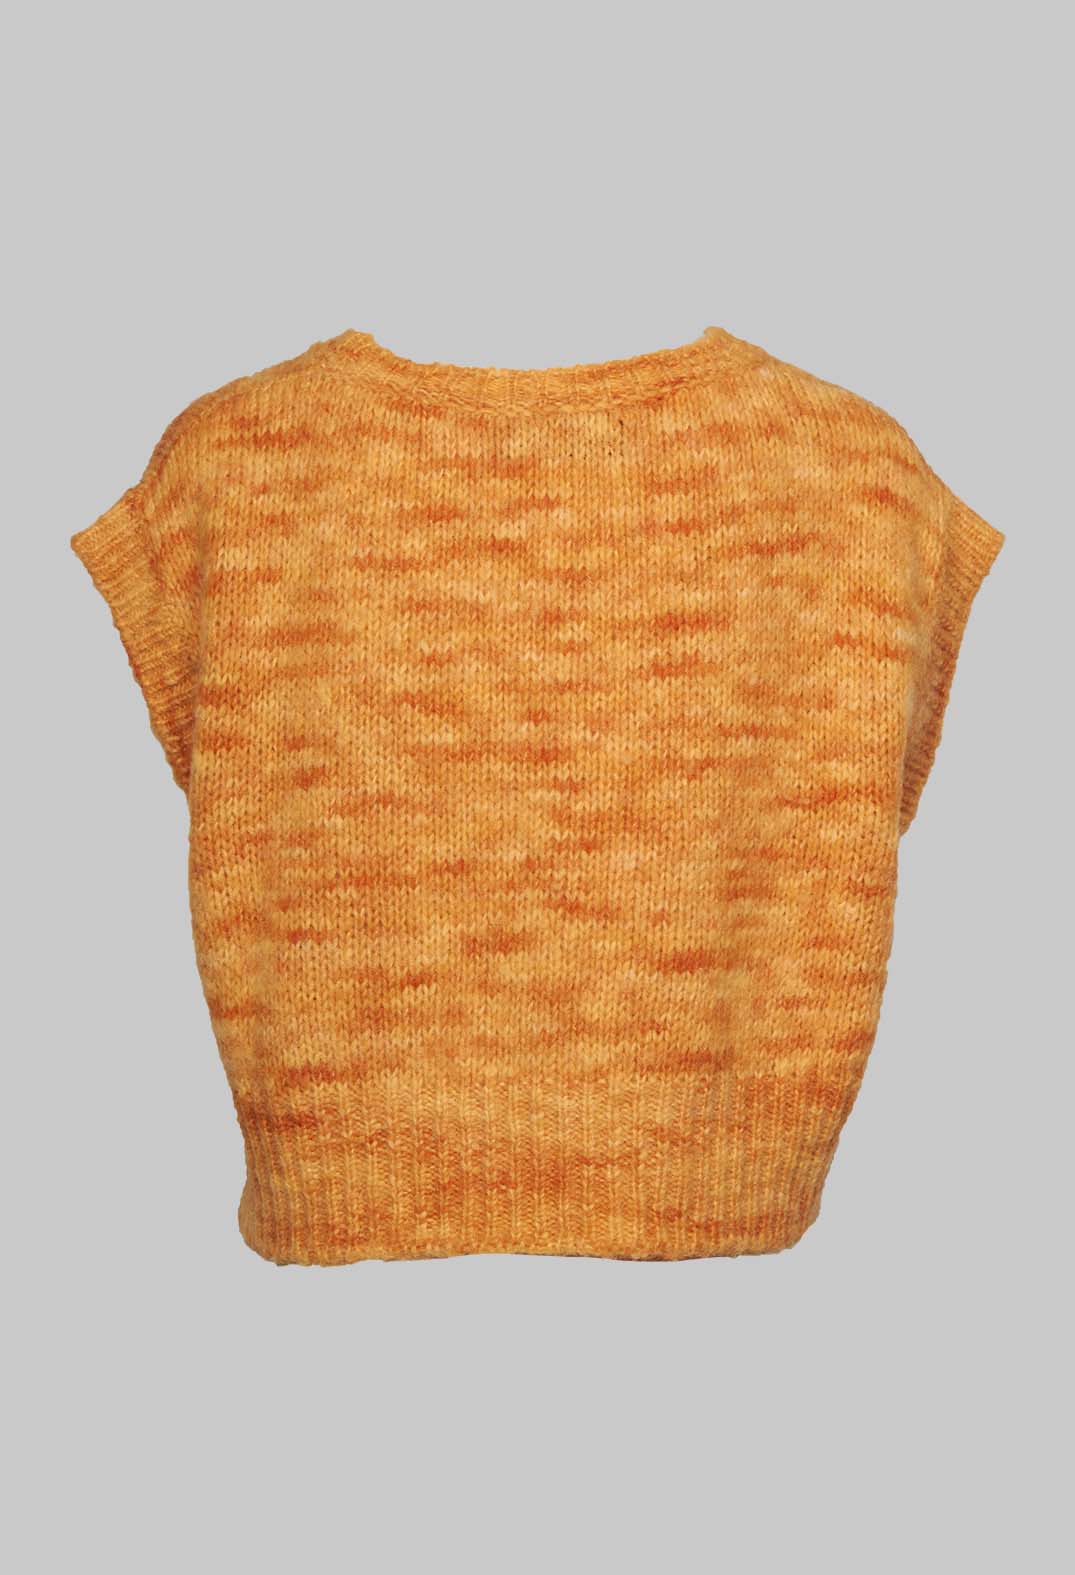 Beatrice B knitted orange vest